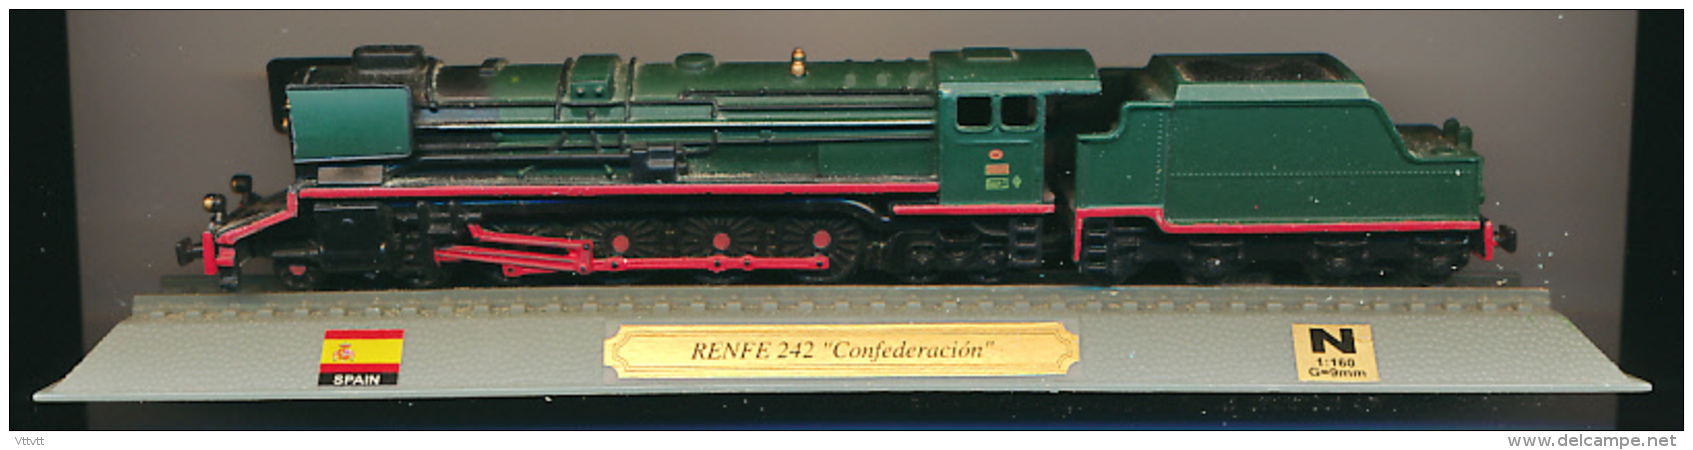 Locomotive : Renfe 242 "Confederacion", Echelle N 1/160, G = 9 Mm, Spain Espagne - Loks